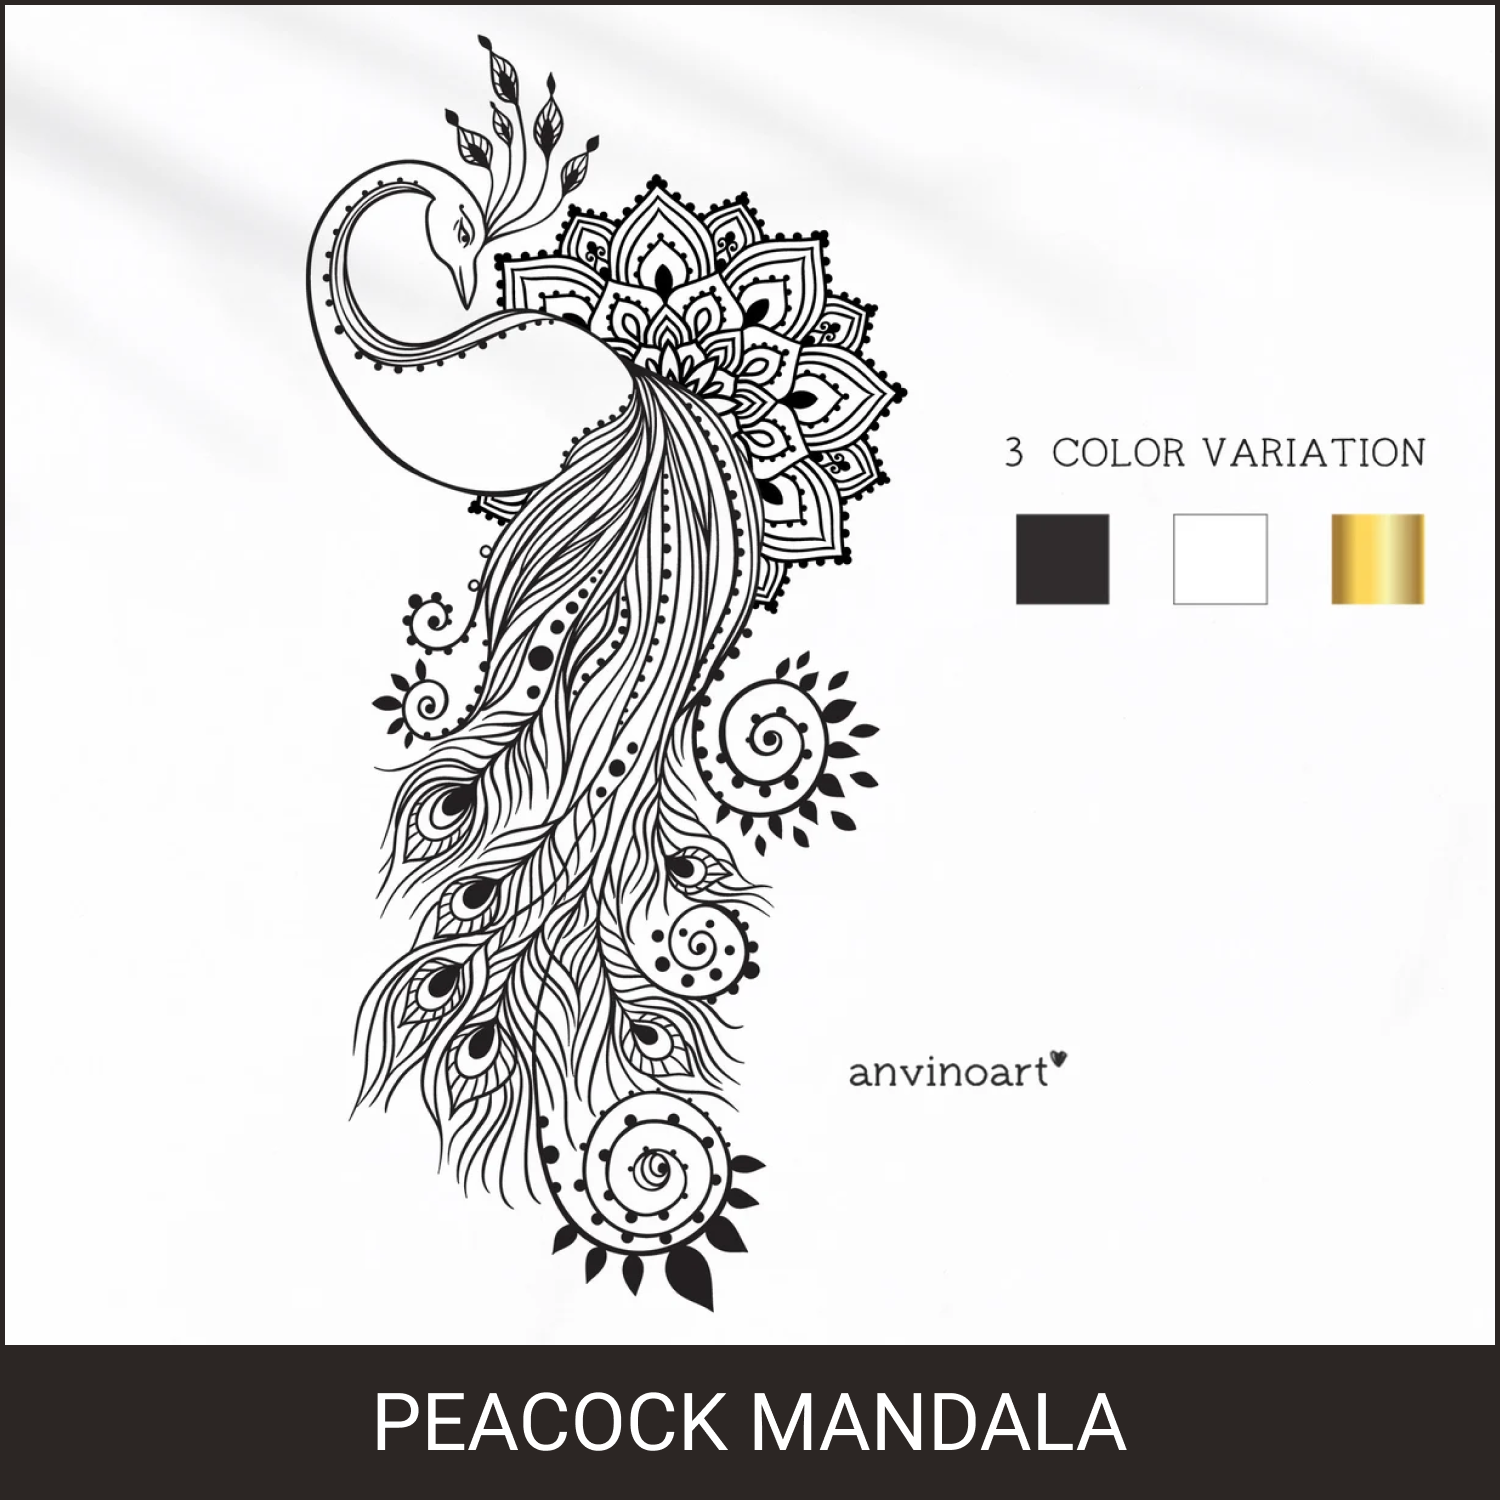 Peacock mandala on the white background.